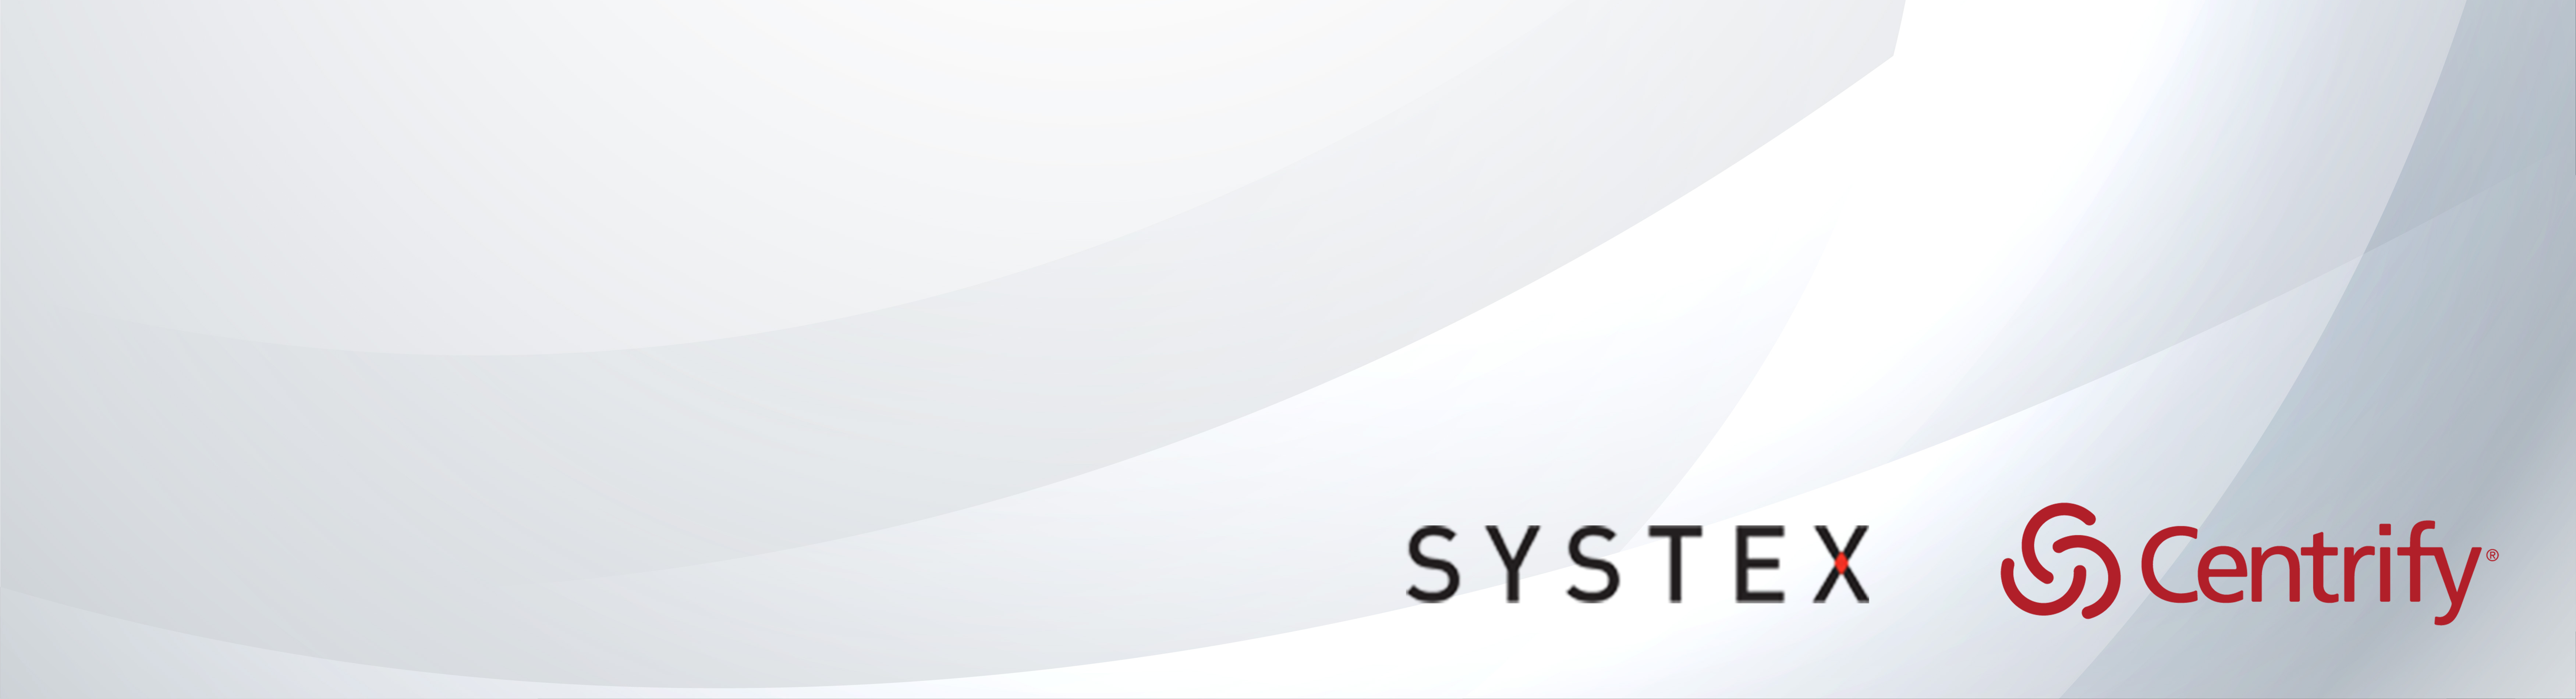 Systex Centrify